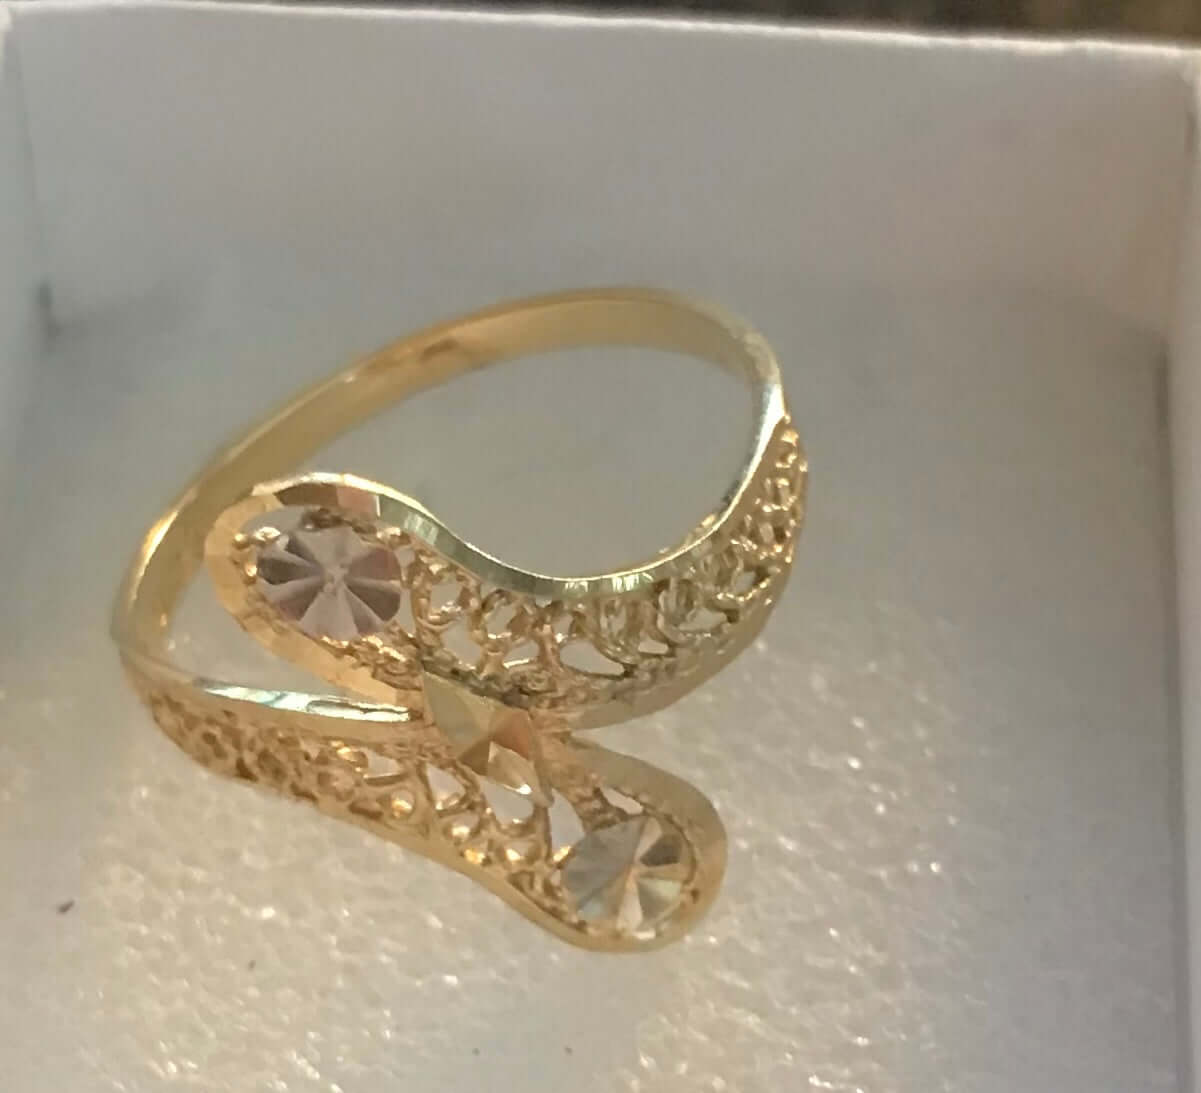 Diamond-Cut Filigree Bypass Ring in 14K Gold